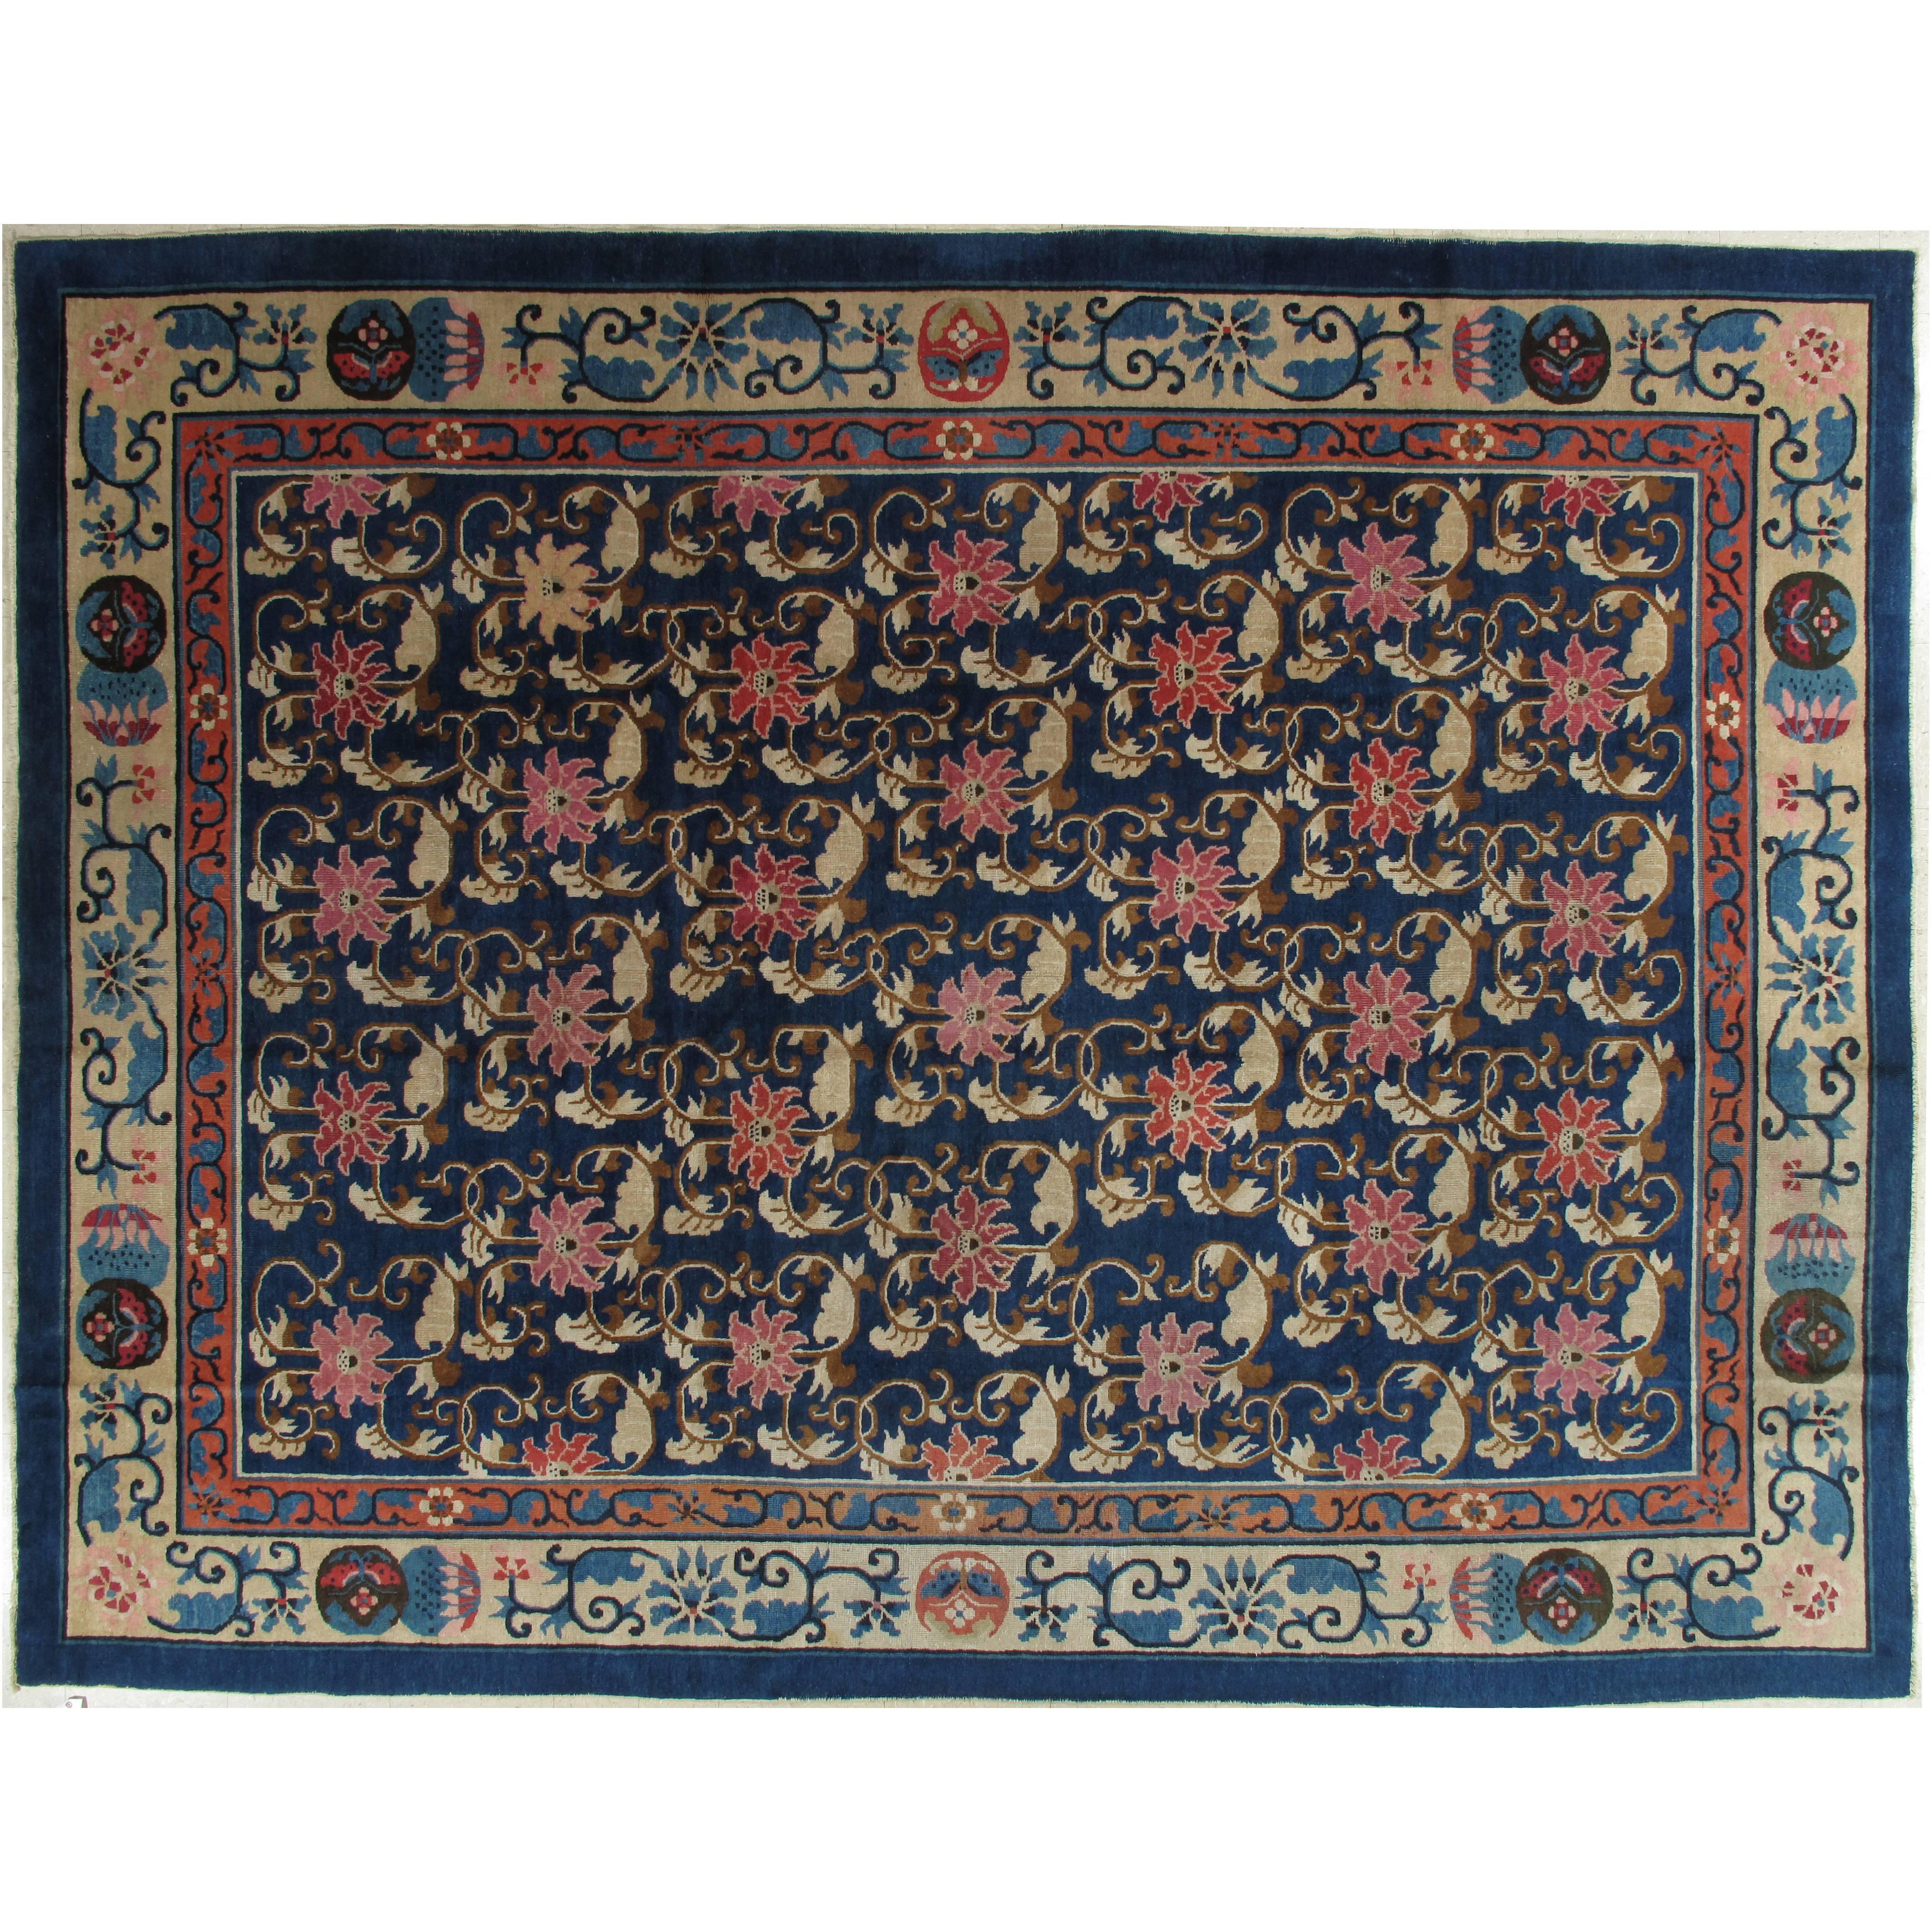 Antique Chinese Carpet, Oriental Rug, Handmade Nice Blue, Beige, Unusual Design